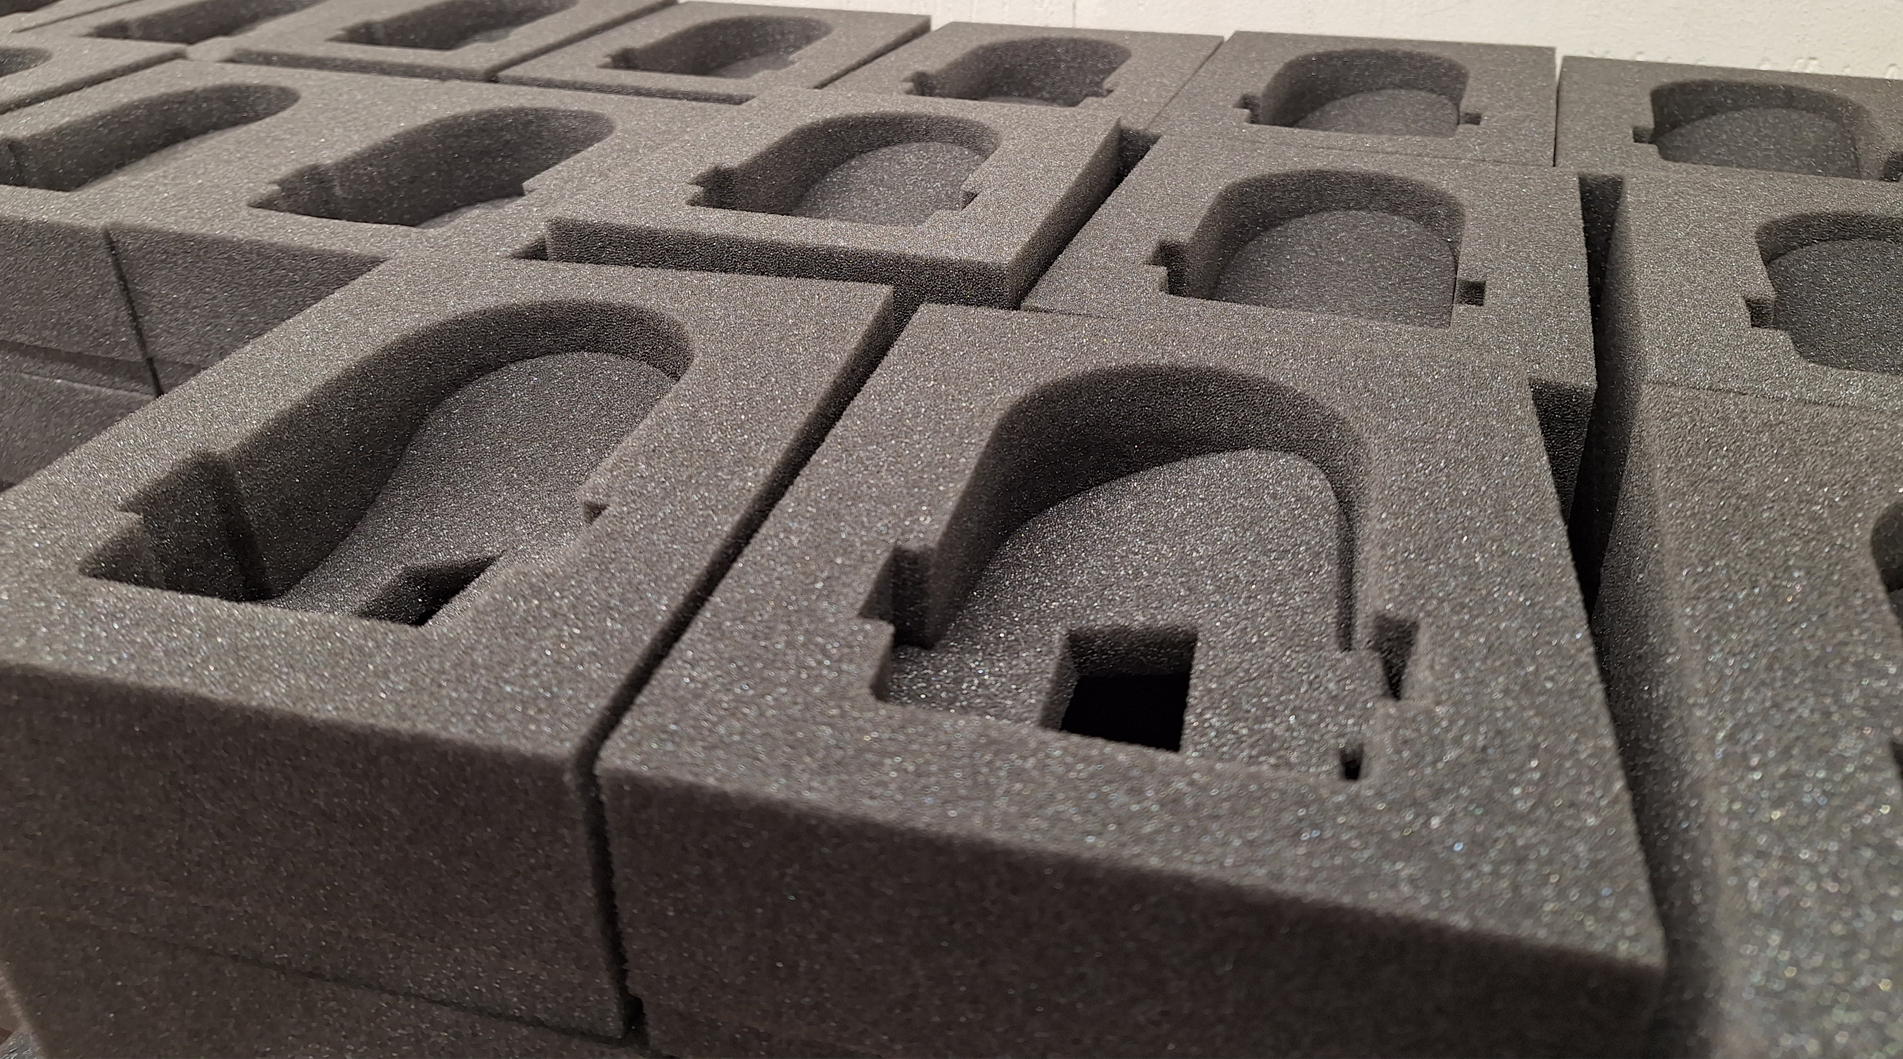 Image showing flexible polyurethane foam boxes close up